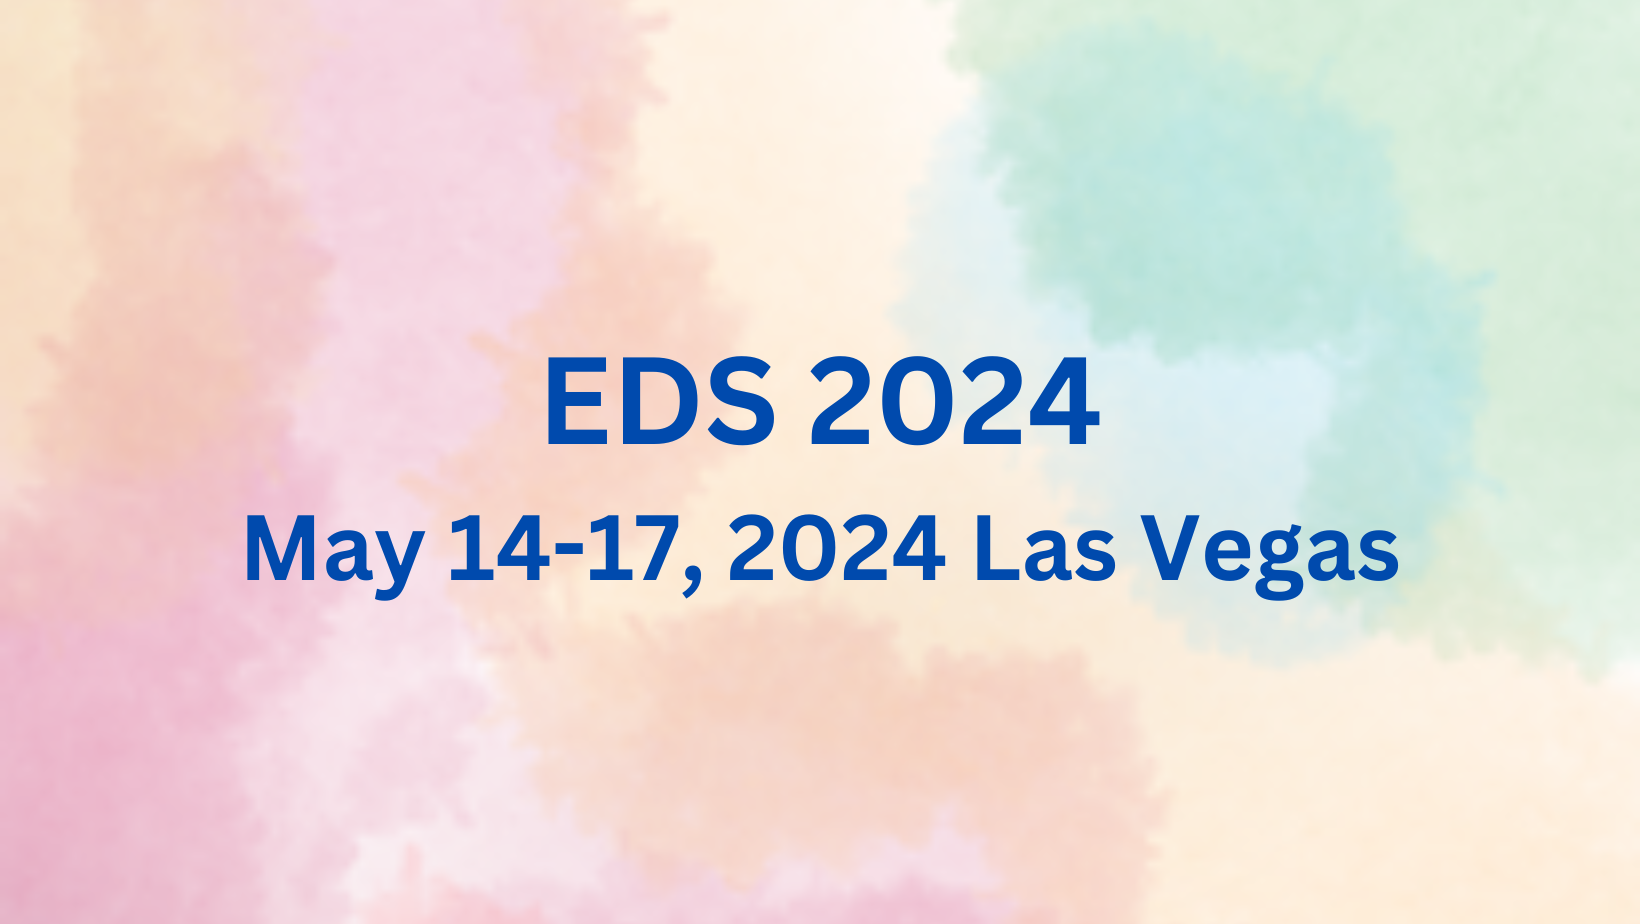 Electronica Distributor Show (EDS) 2024 Las Vegas, USA Stand Builder